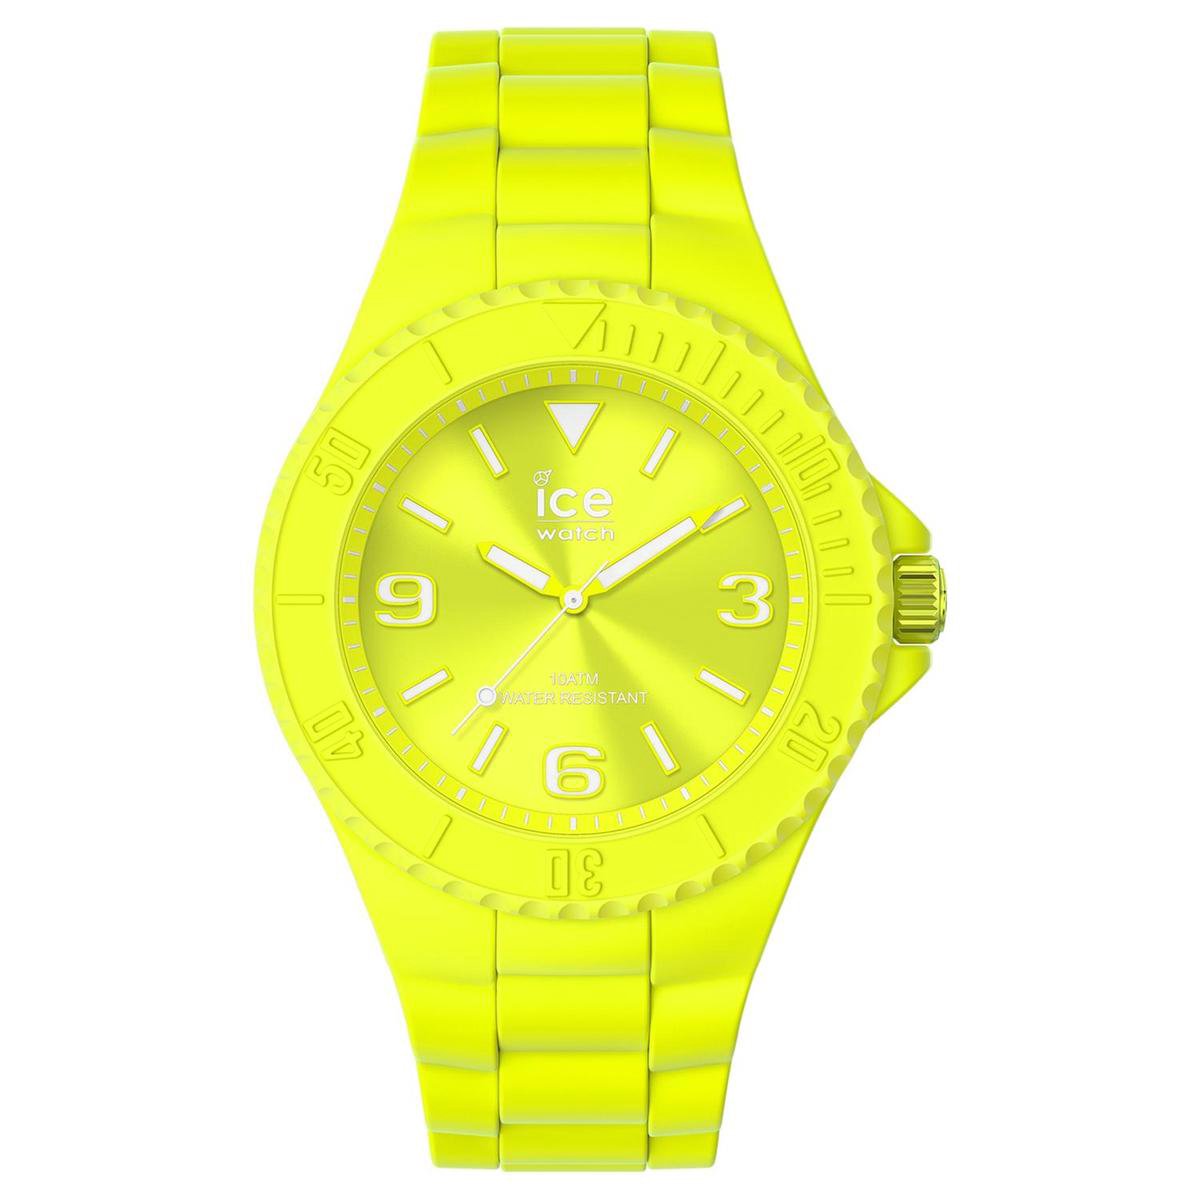 Conform Gewond raken Weerkaatsing Ice Watch ICE generation - Flashy yellow 019161 Horloge - Siliconen - Geel  - Ã˜ 40 mm | bol.com